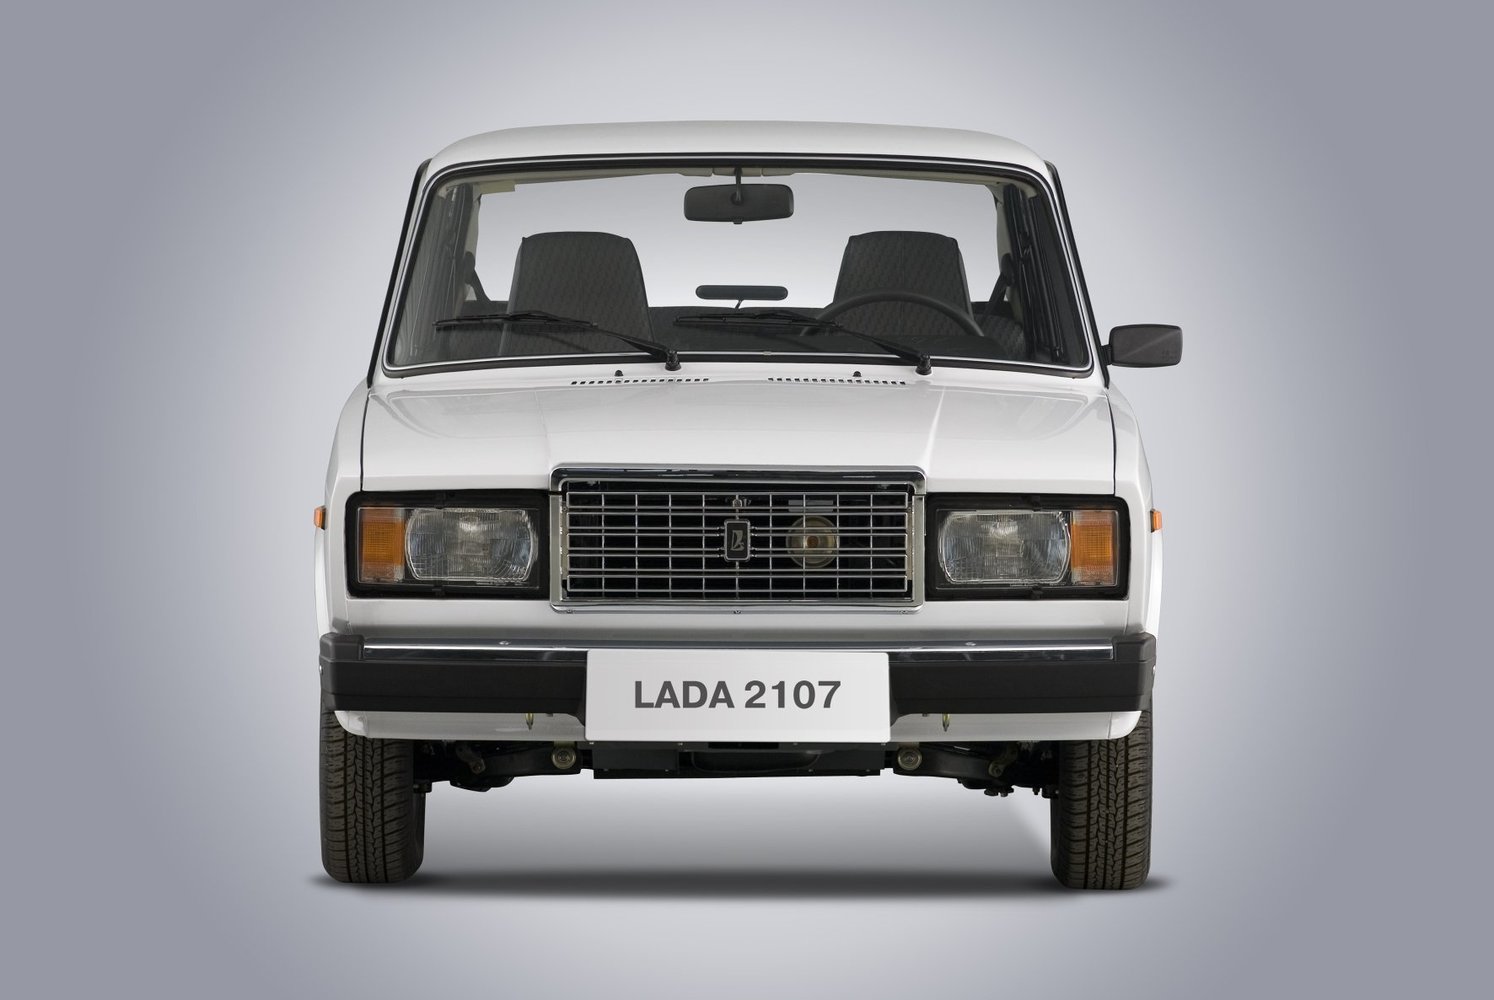 седан ВАЗ (Lada) 2107 1982 - 2013г выпуска модификация 1.3 MT (135 л.с.)